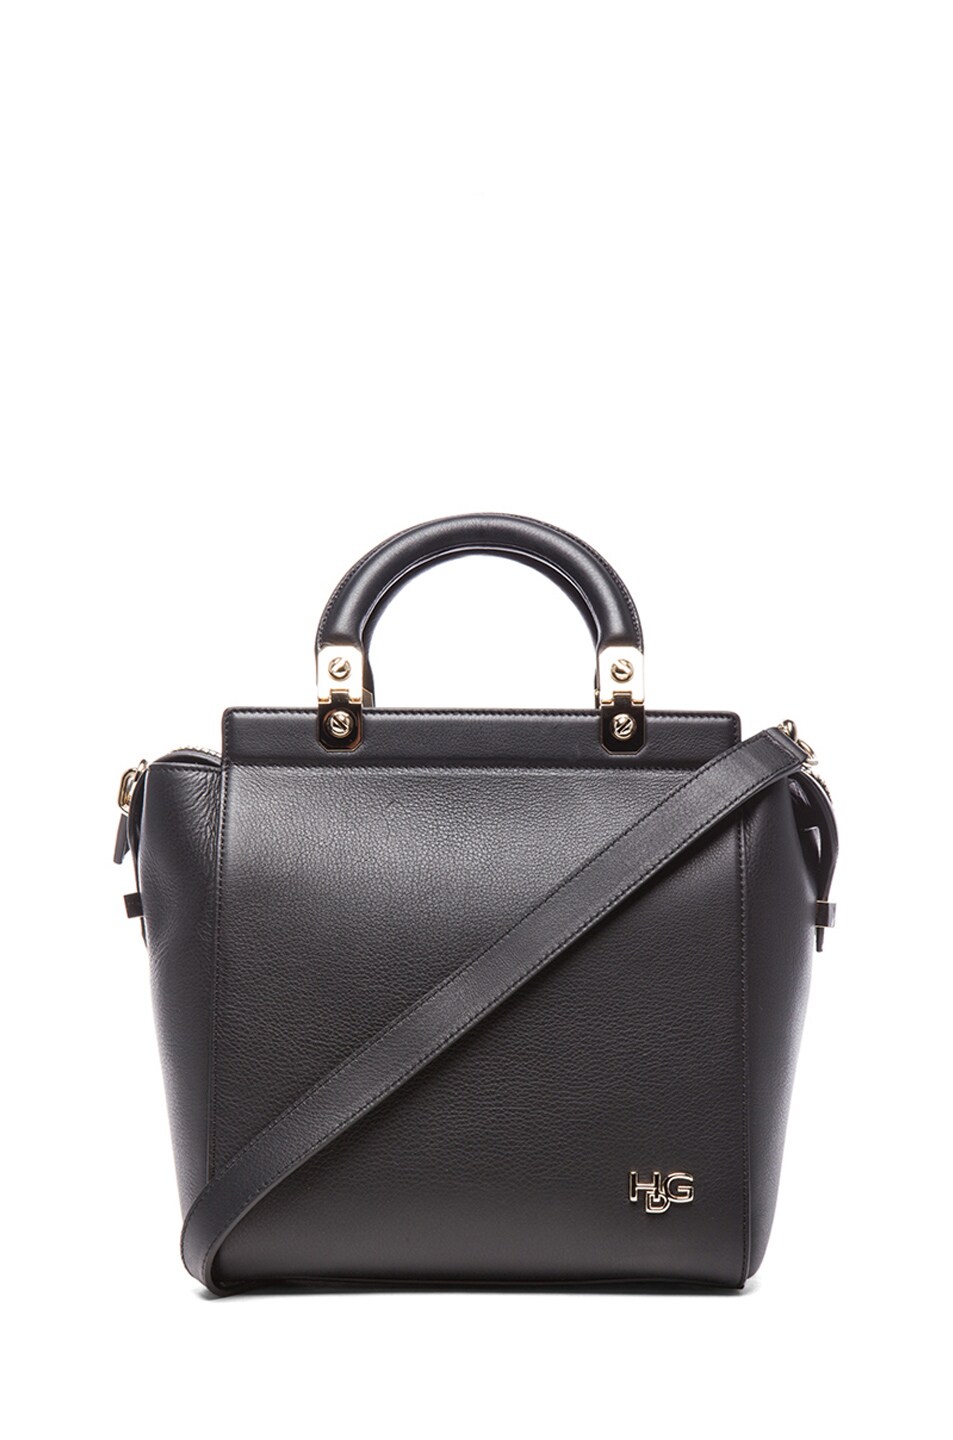 Image 1 of Givenchy HDG Doctor Bag in Black